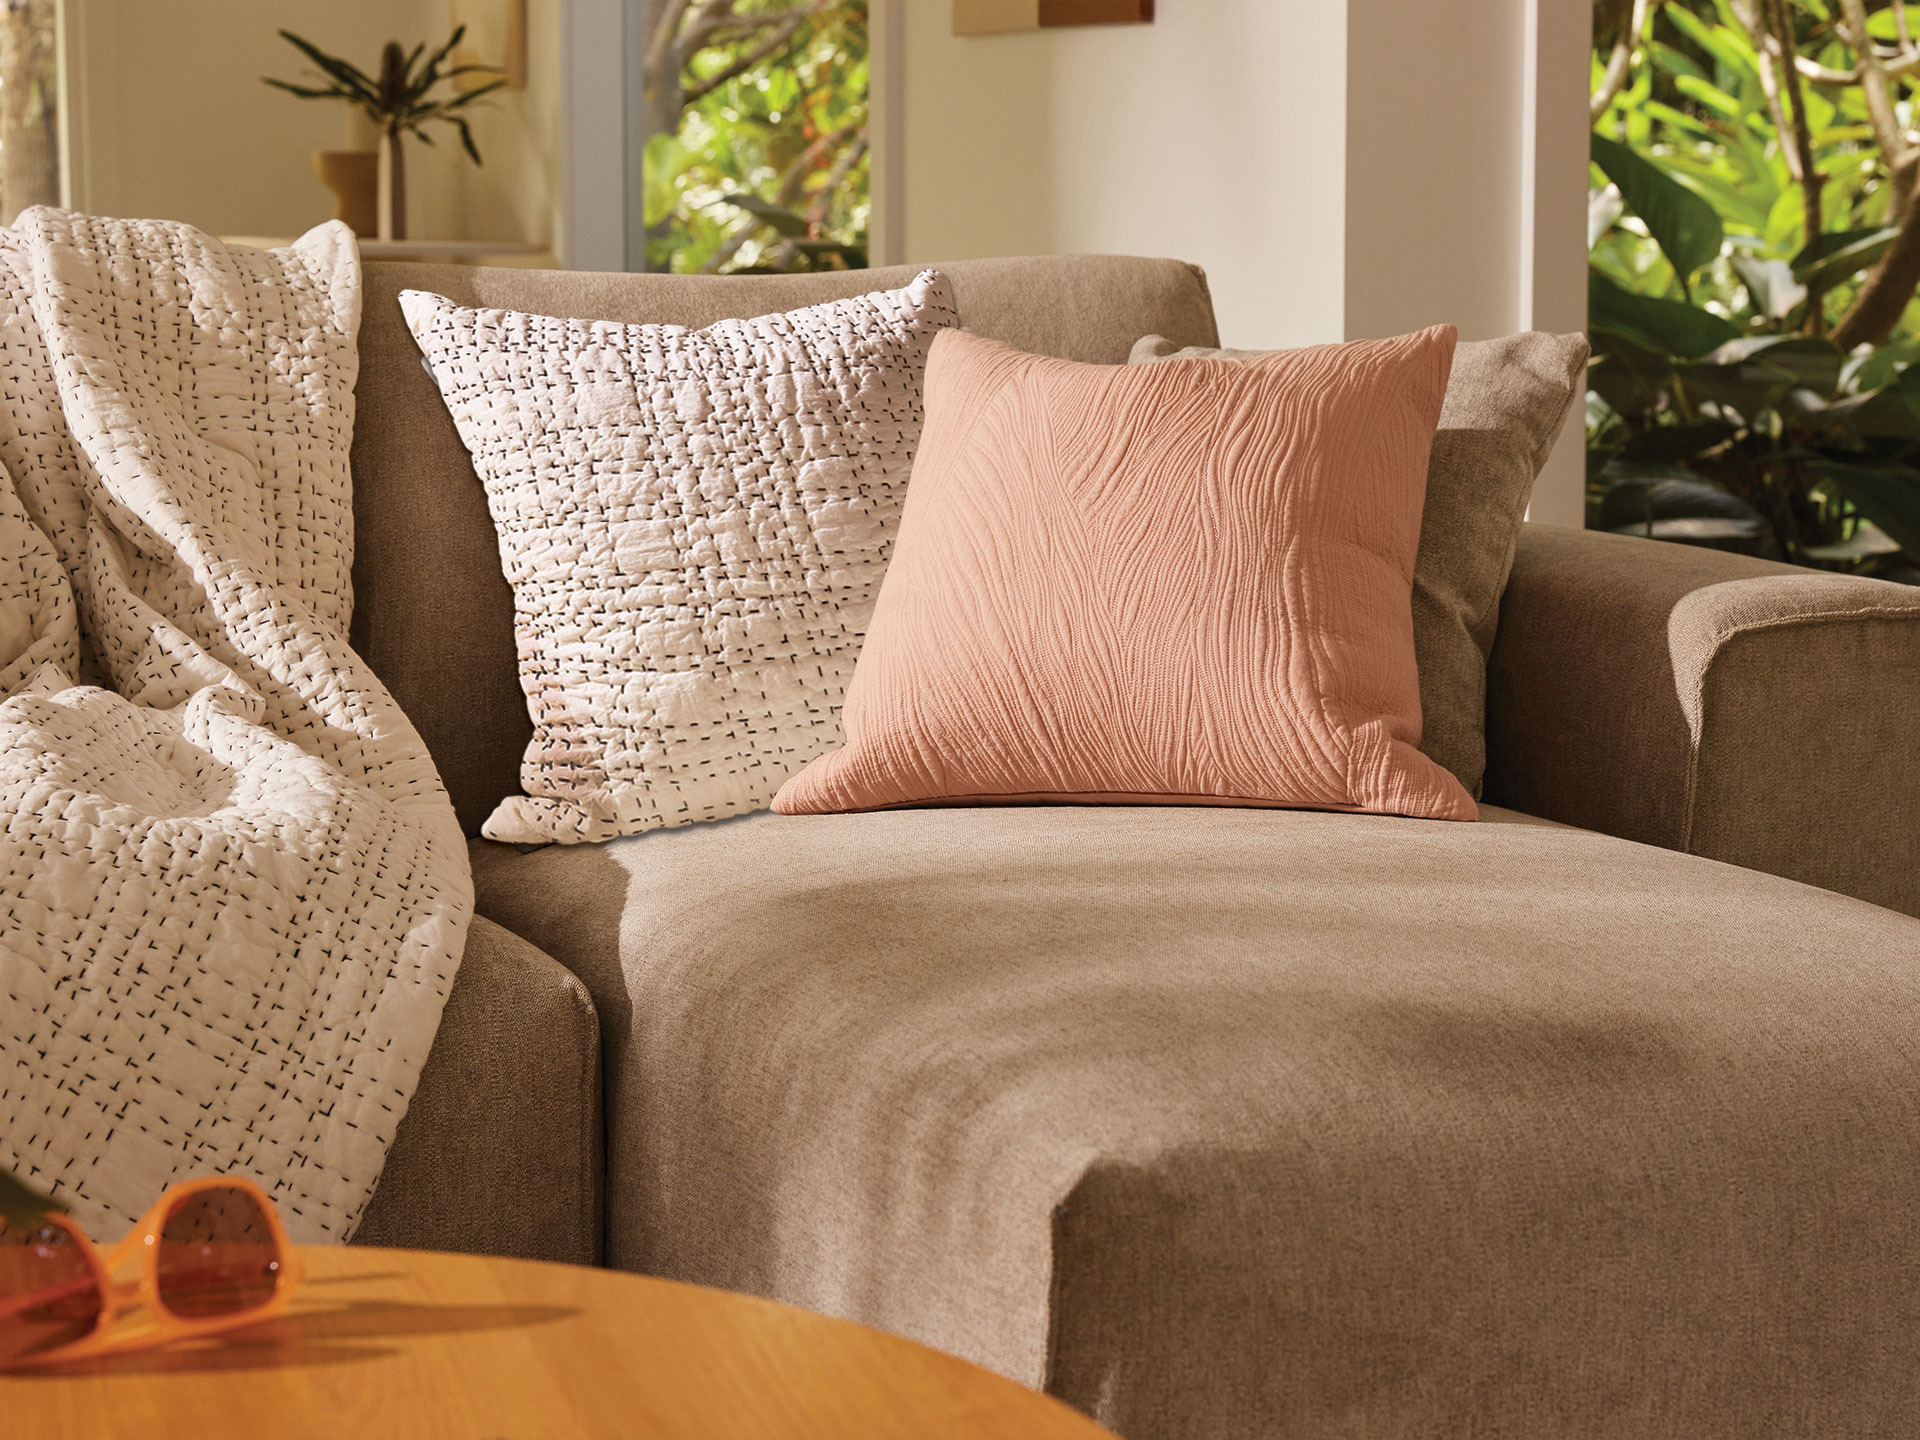 A range of Koala cushions and a throw on a Koala sofa